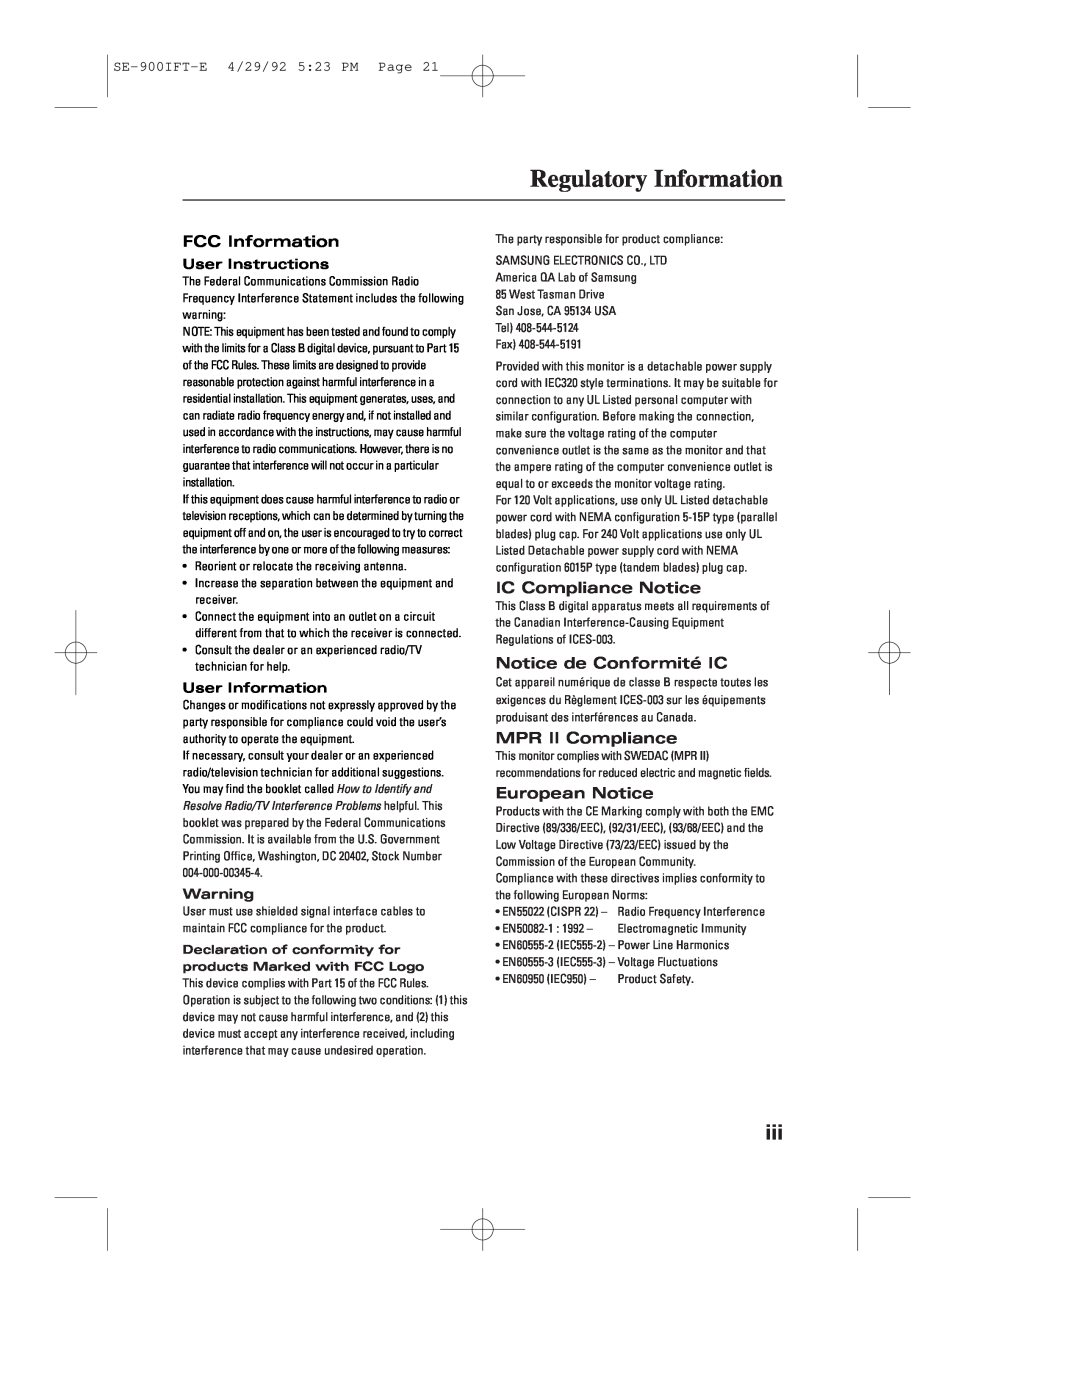 Samsung 900IFT Regulatory Information, FCC Information, IC Compliance Notice, Notice de Conformité IC, MPR II Compliance 